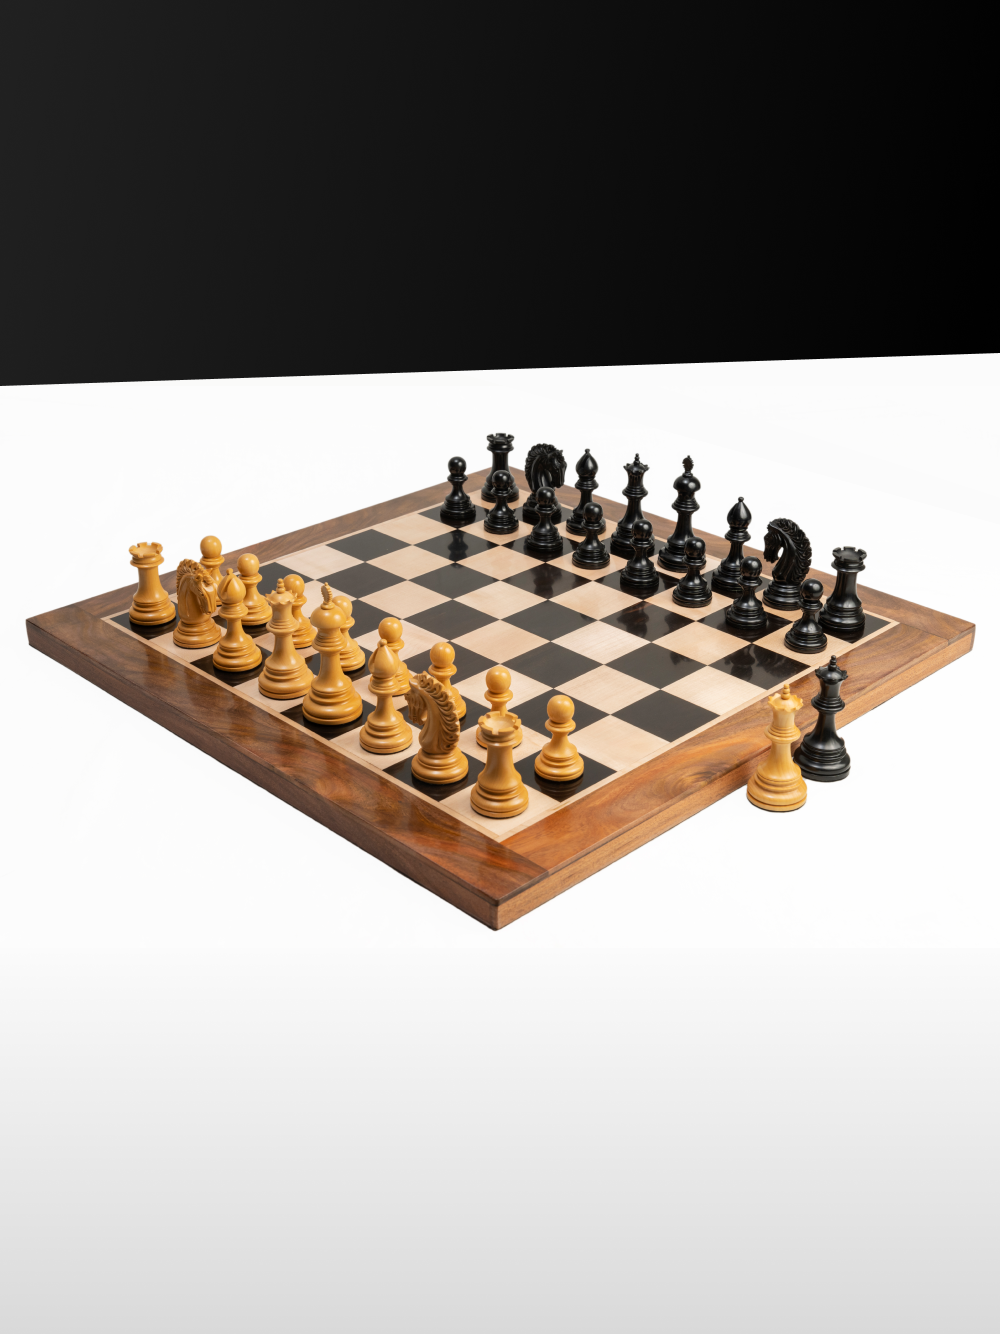 Emperor chess set